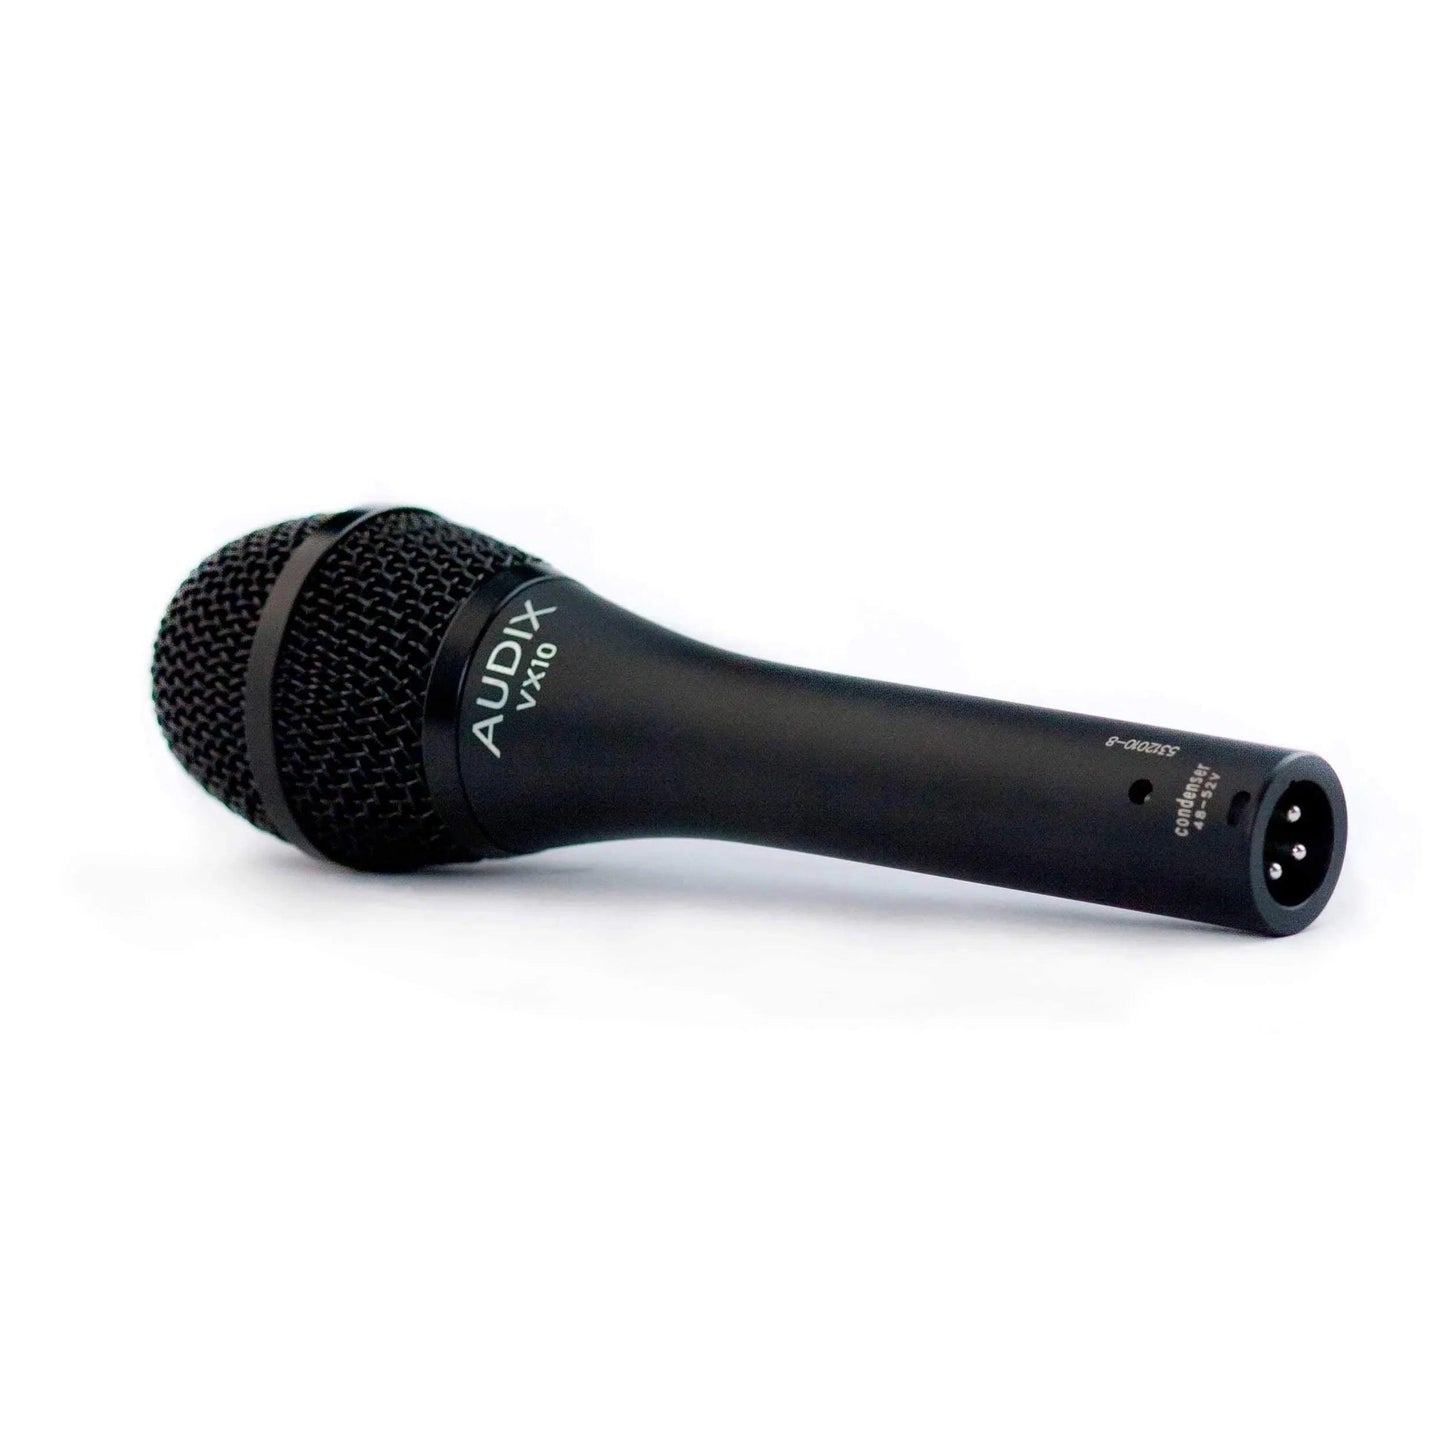 Audix VX10LO Condenser Microphone